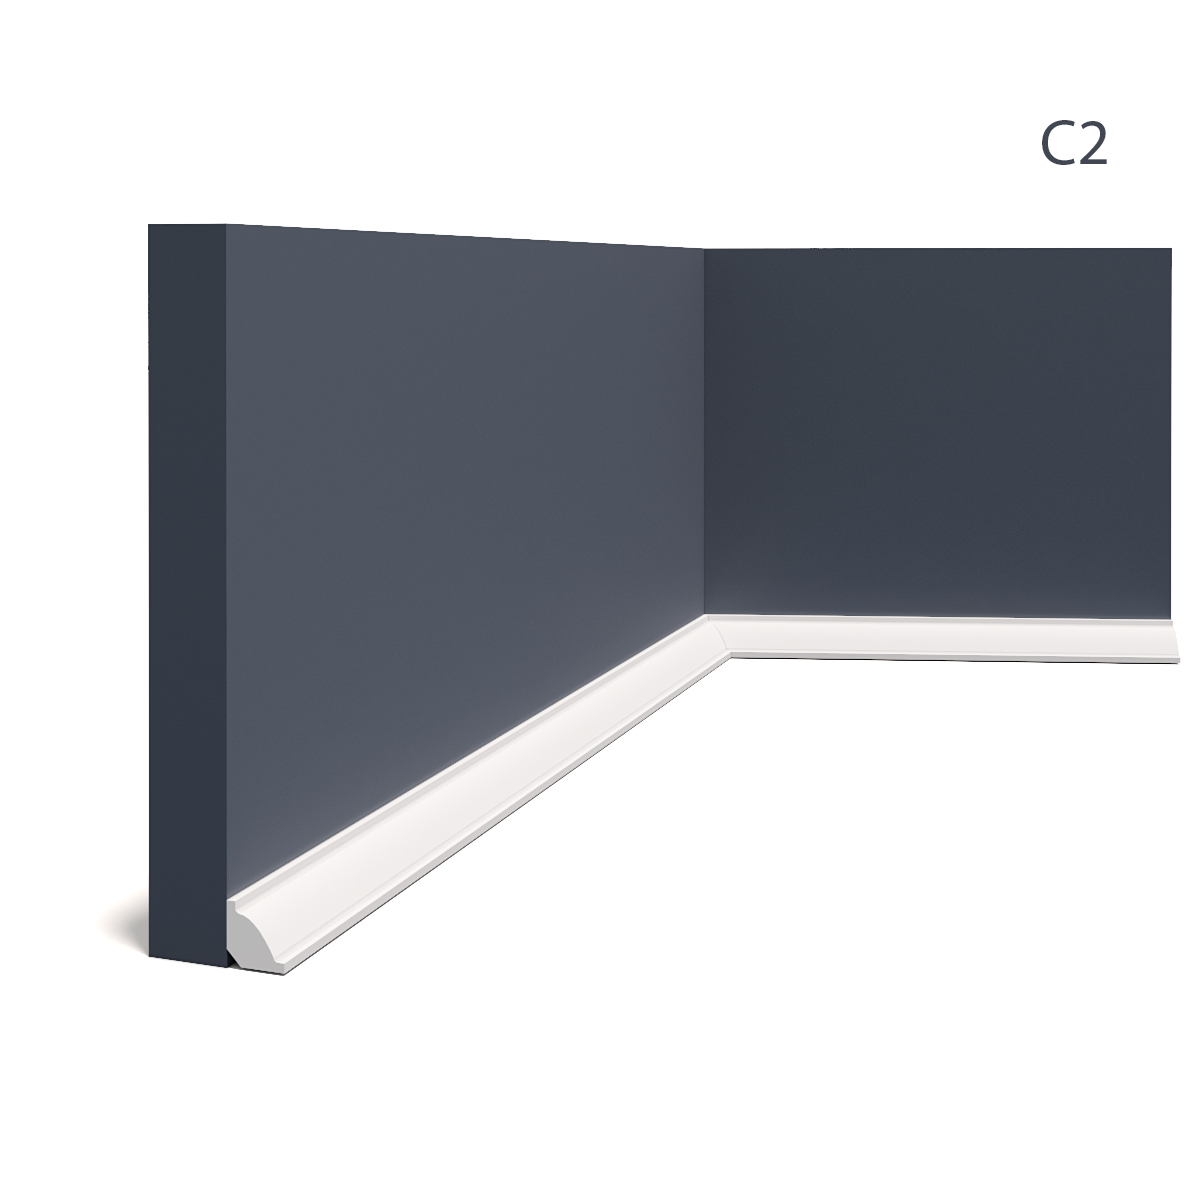 Cornișe tavan Manavi MNV-C2 - 2.2x2.2x200, material: polimer rigid